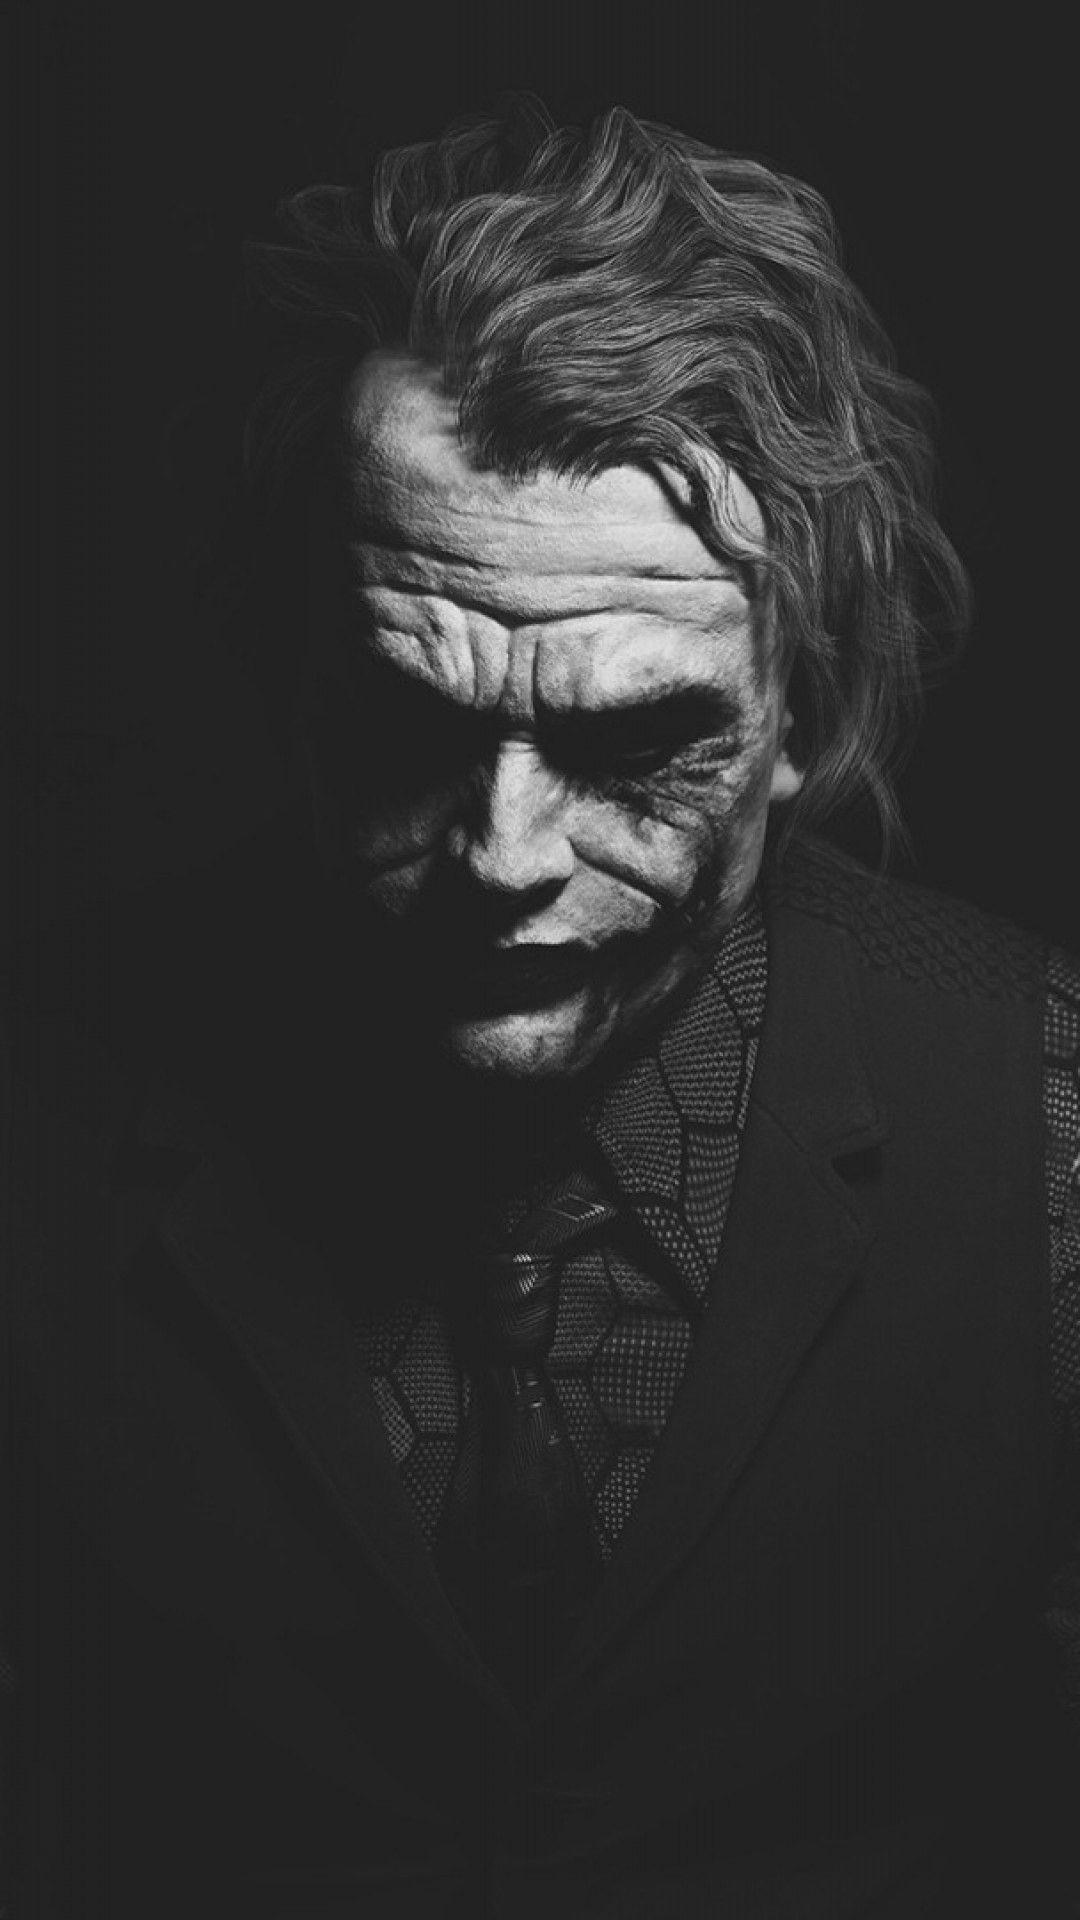 Heath Ledger Joker Wallpaper HD 1080x1920 picture. Joker iphone